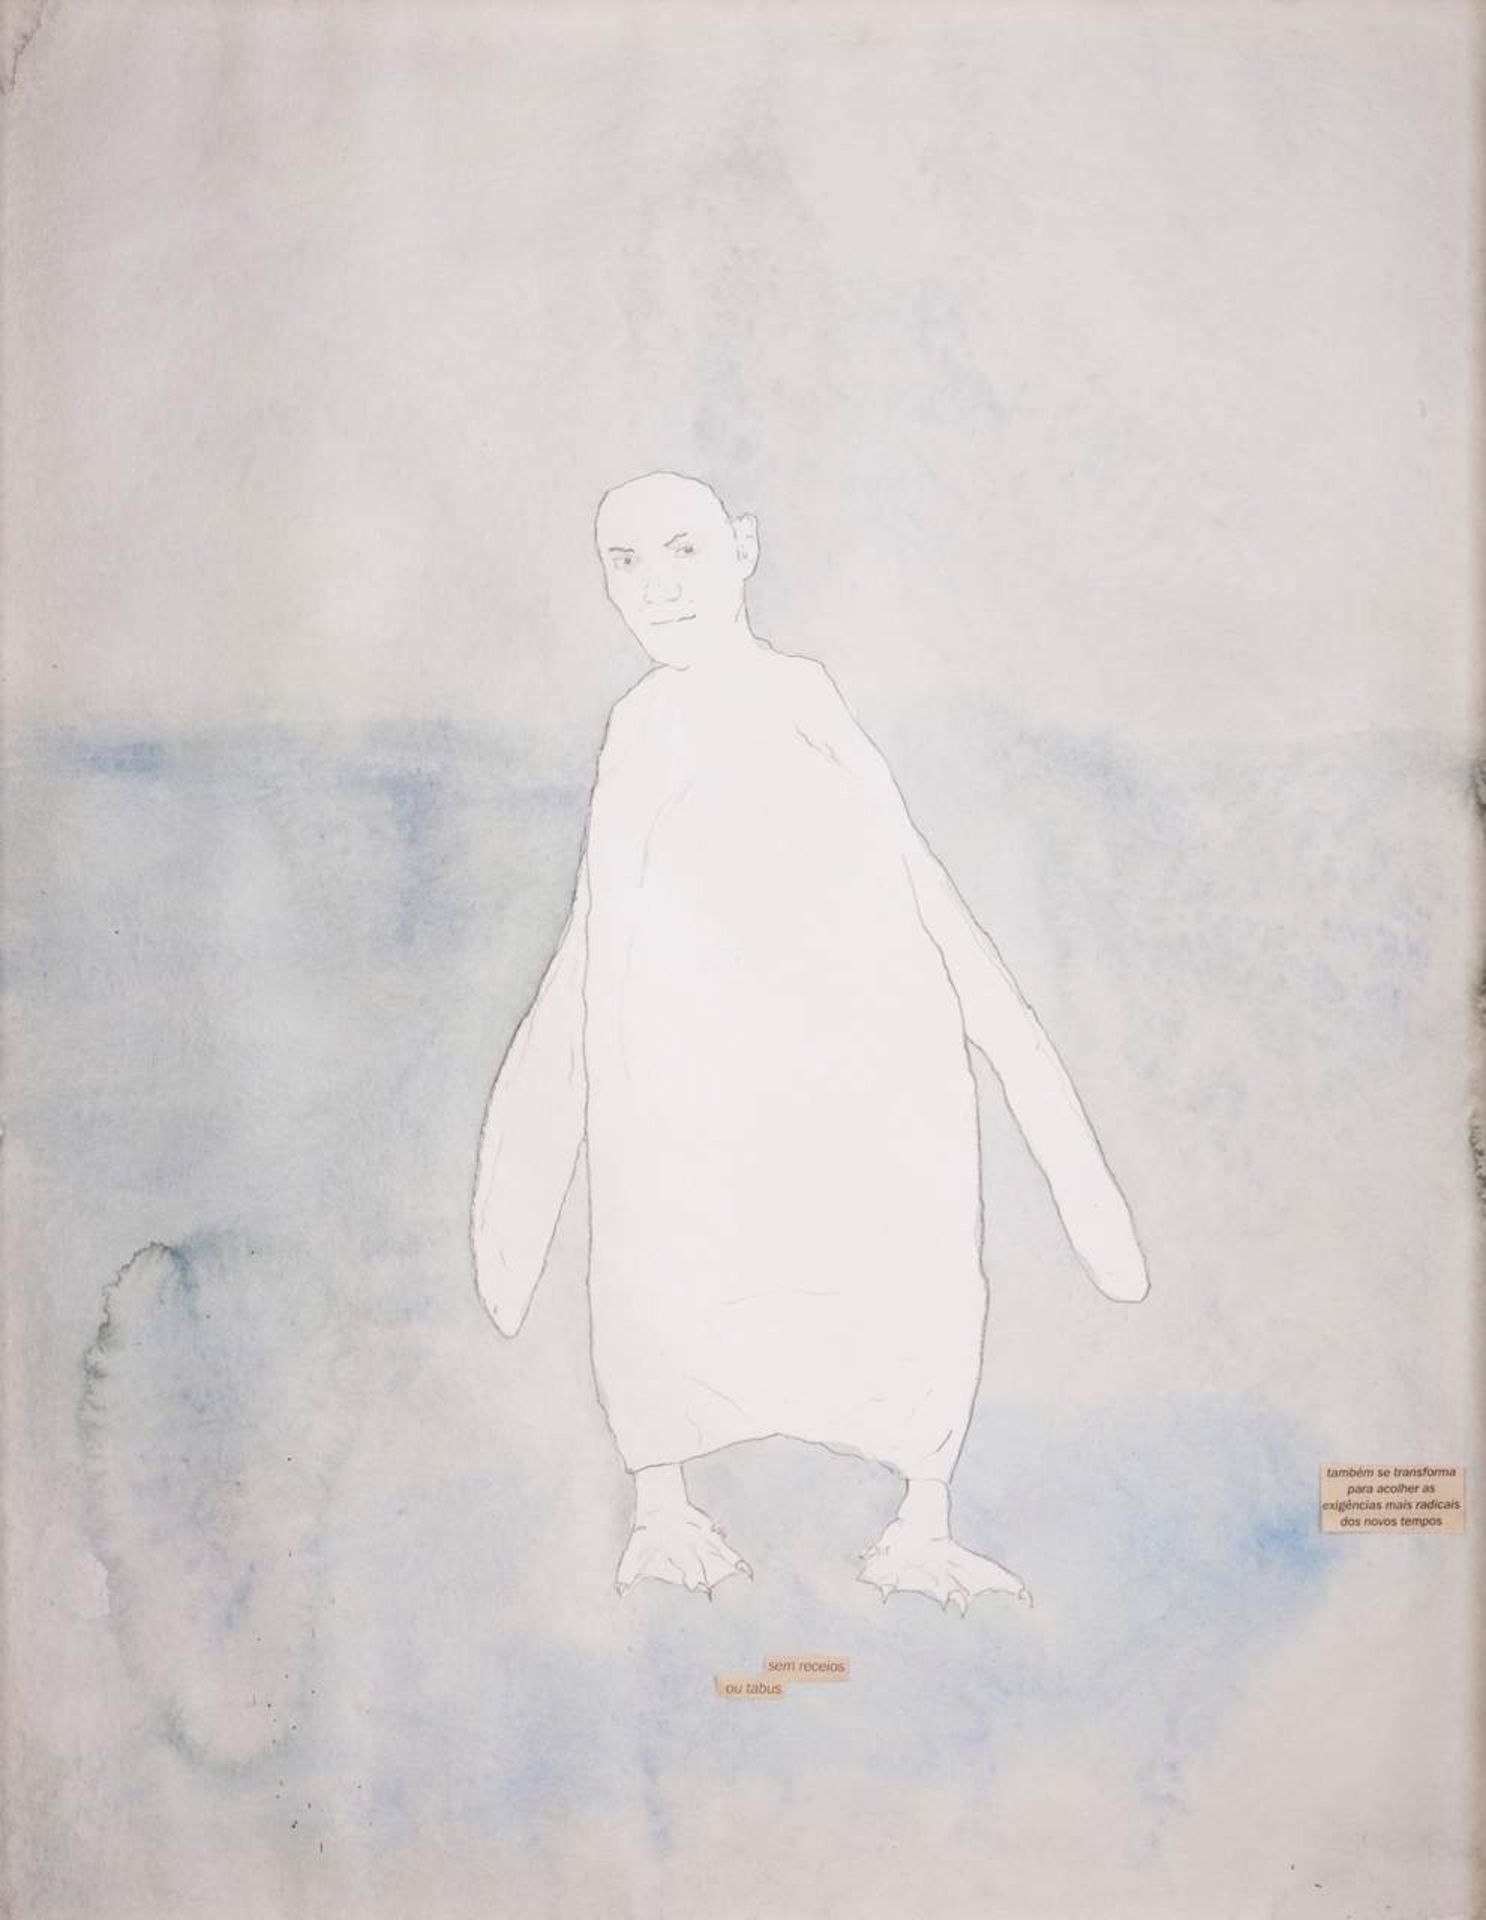 Susanne Themlitz (b. 1968)
Untitled
Mixed media on paper

62,5x49 cm